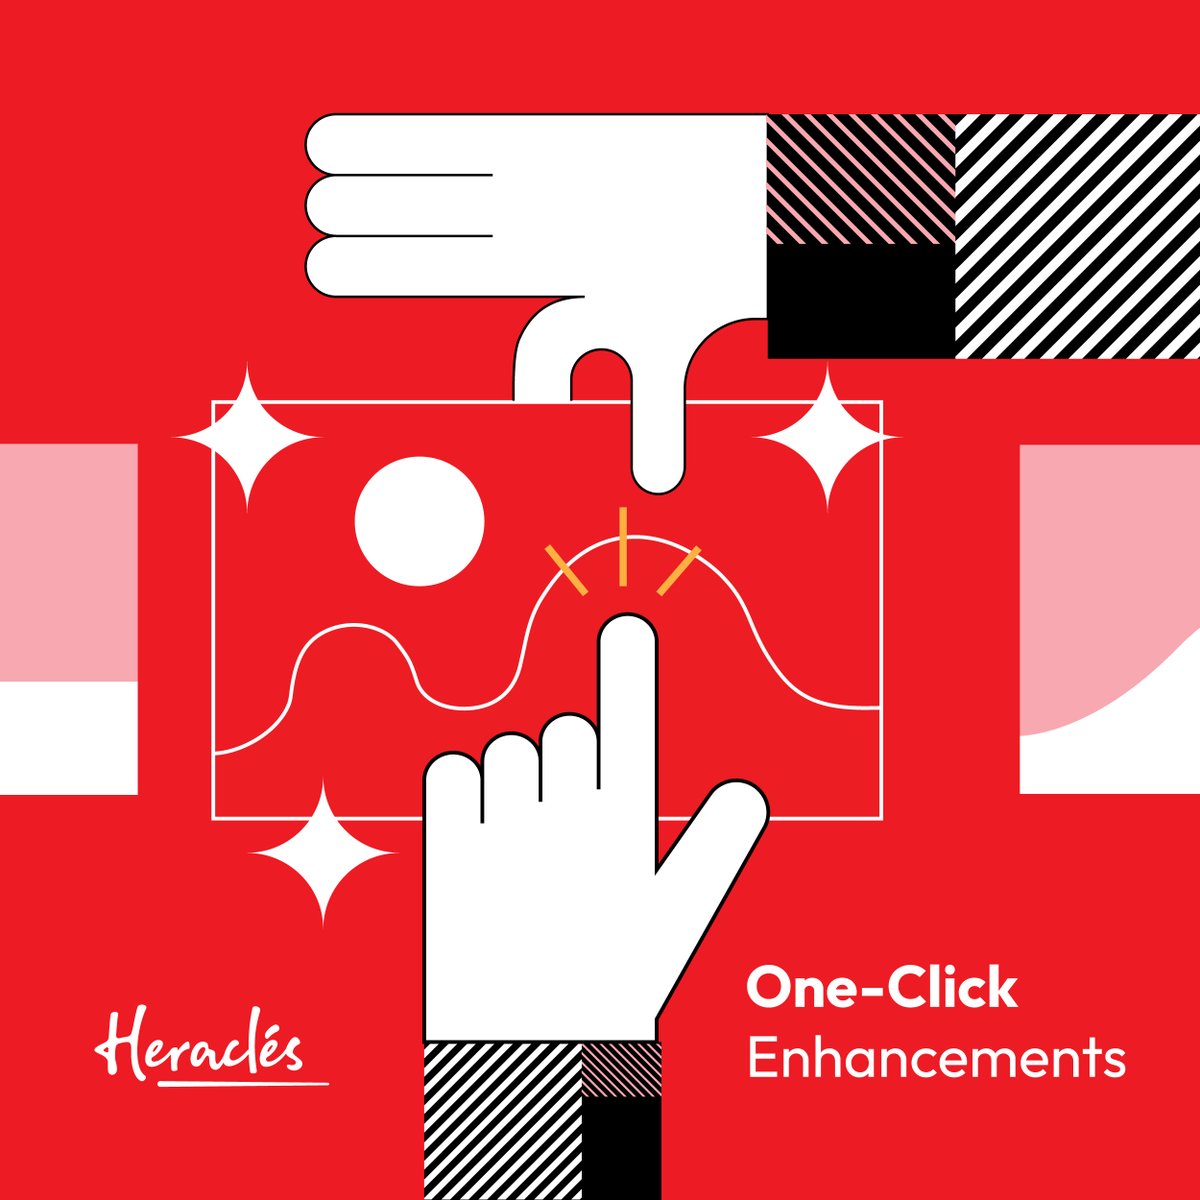 One-click enhancements..
#digitalmarketing #brandingstrategy